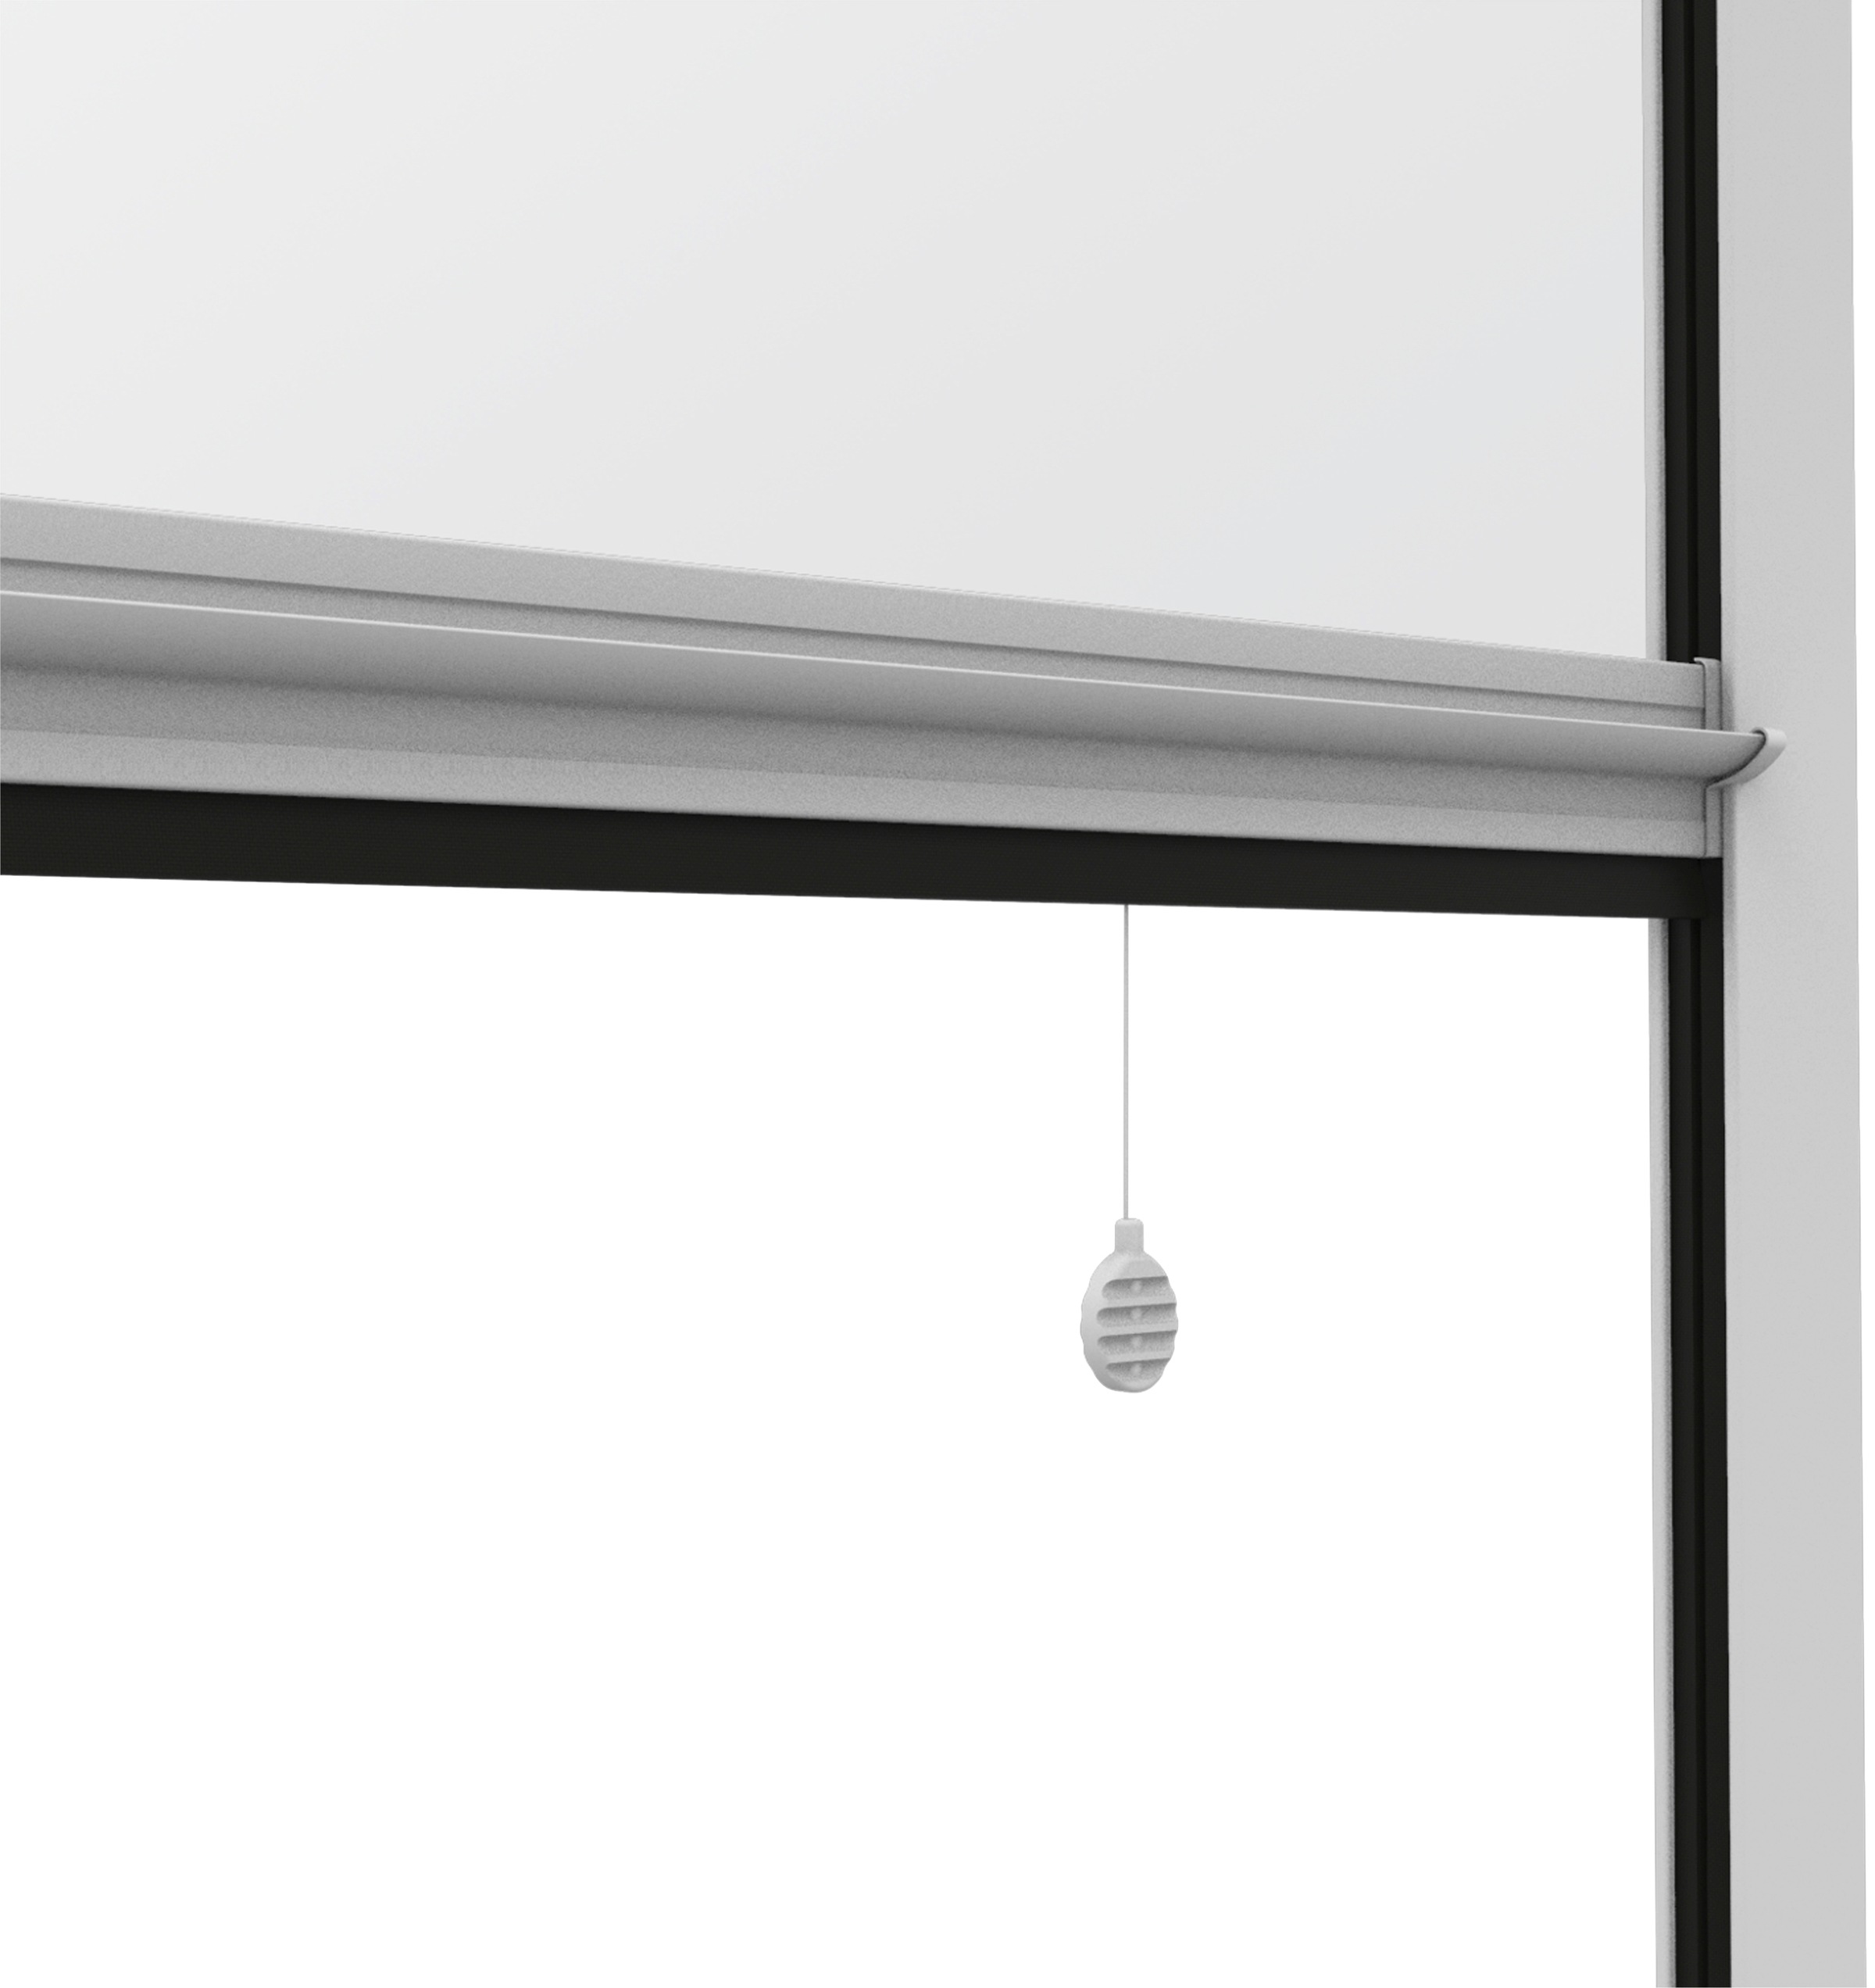 Windhager Insektenschutz-Fensterrahmen »Rollo Basic«, BxH: 160x160 cm, kürzbar, inkl. Befestigungsmaterial